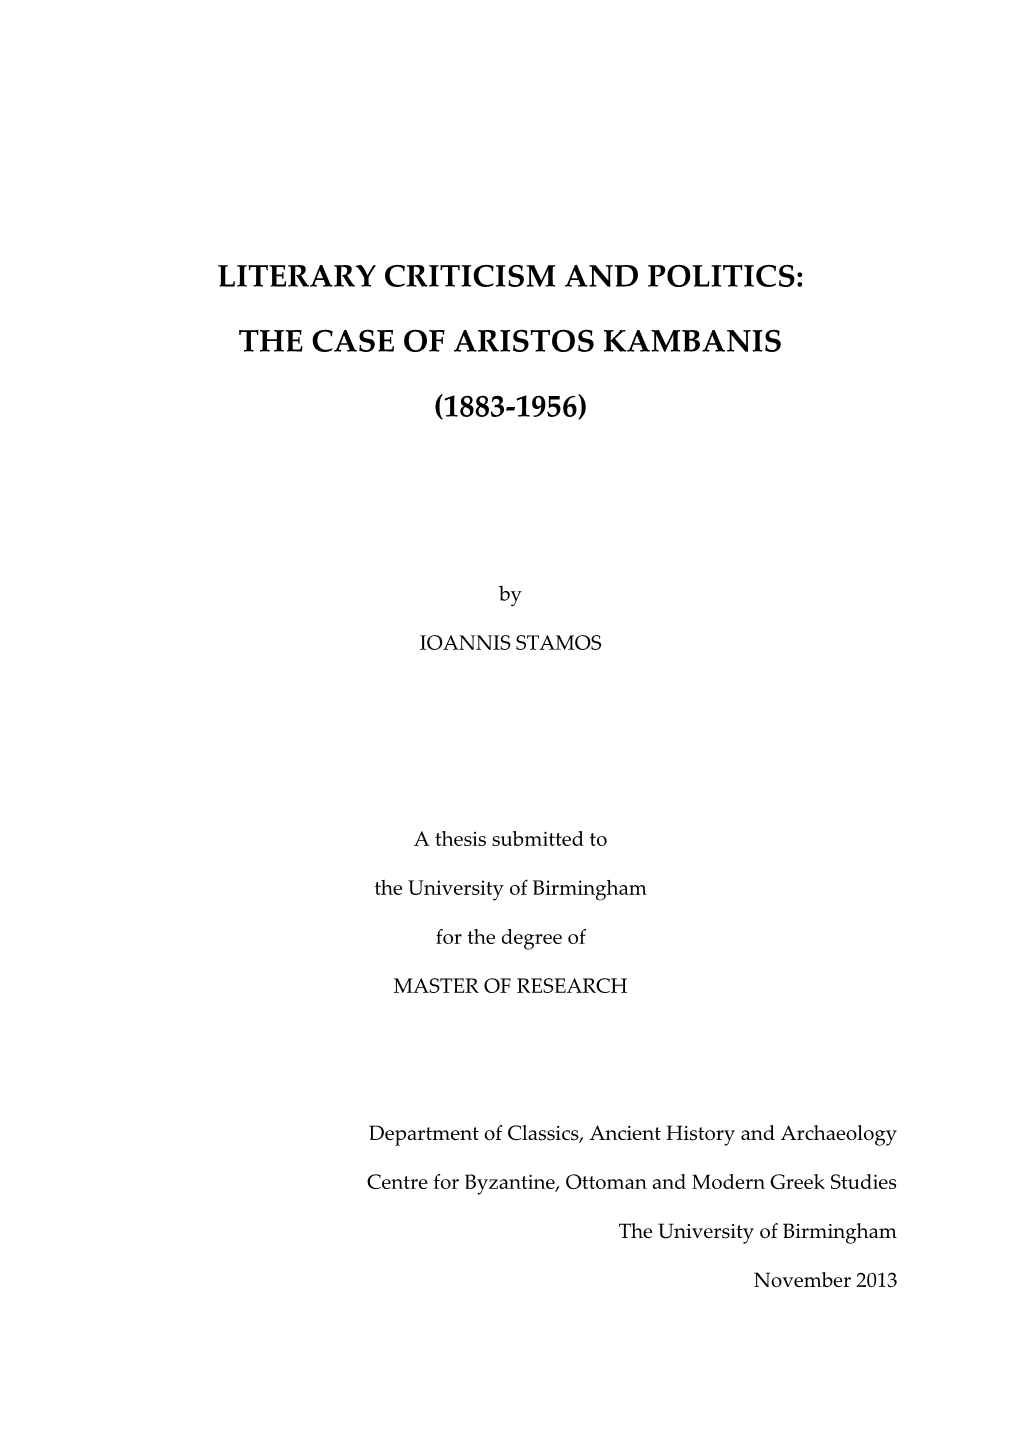 Literary Criticism and Politics